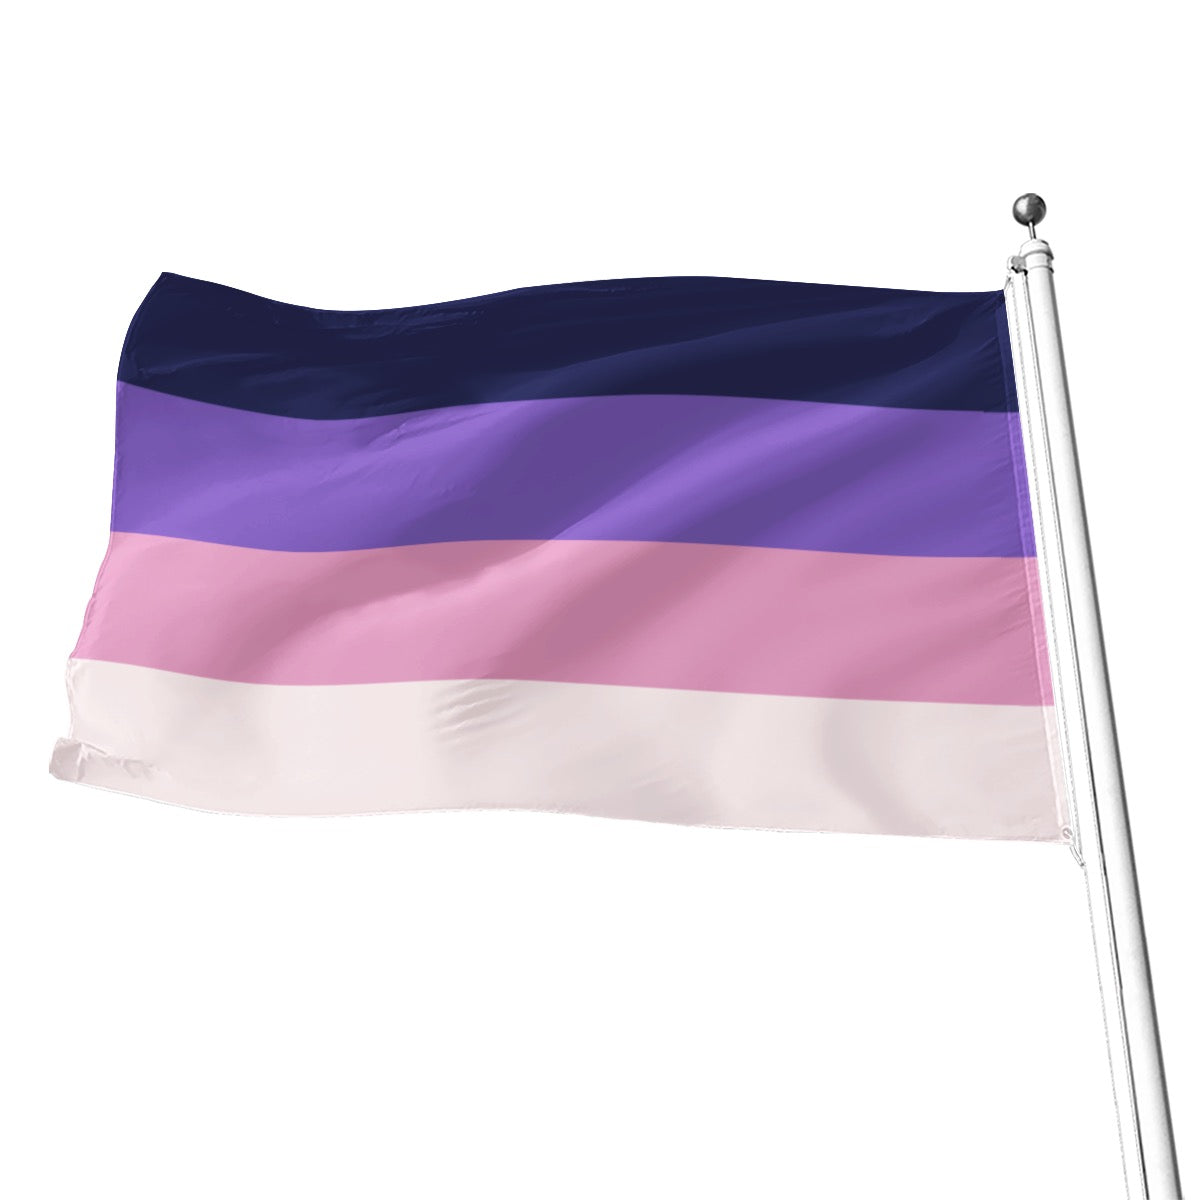 Alternate Asexual Pride Flag